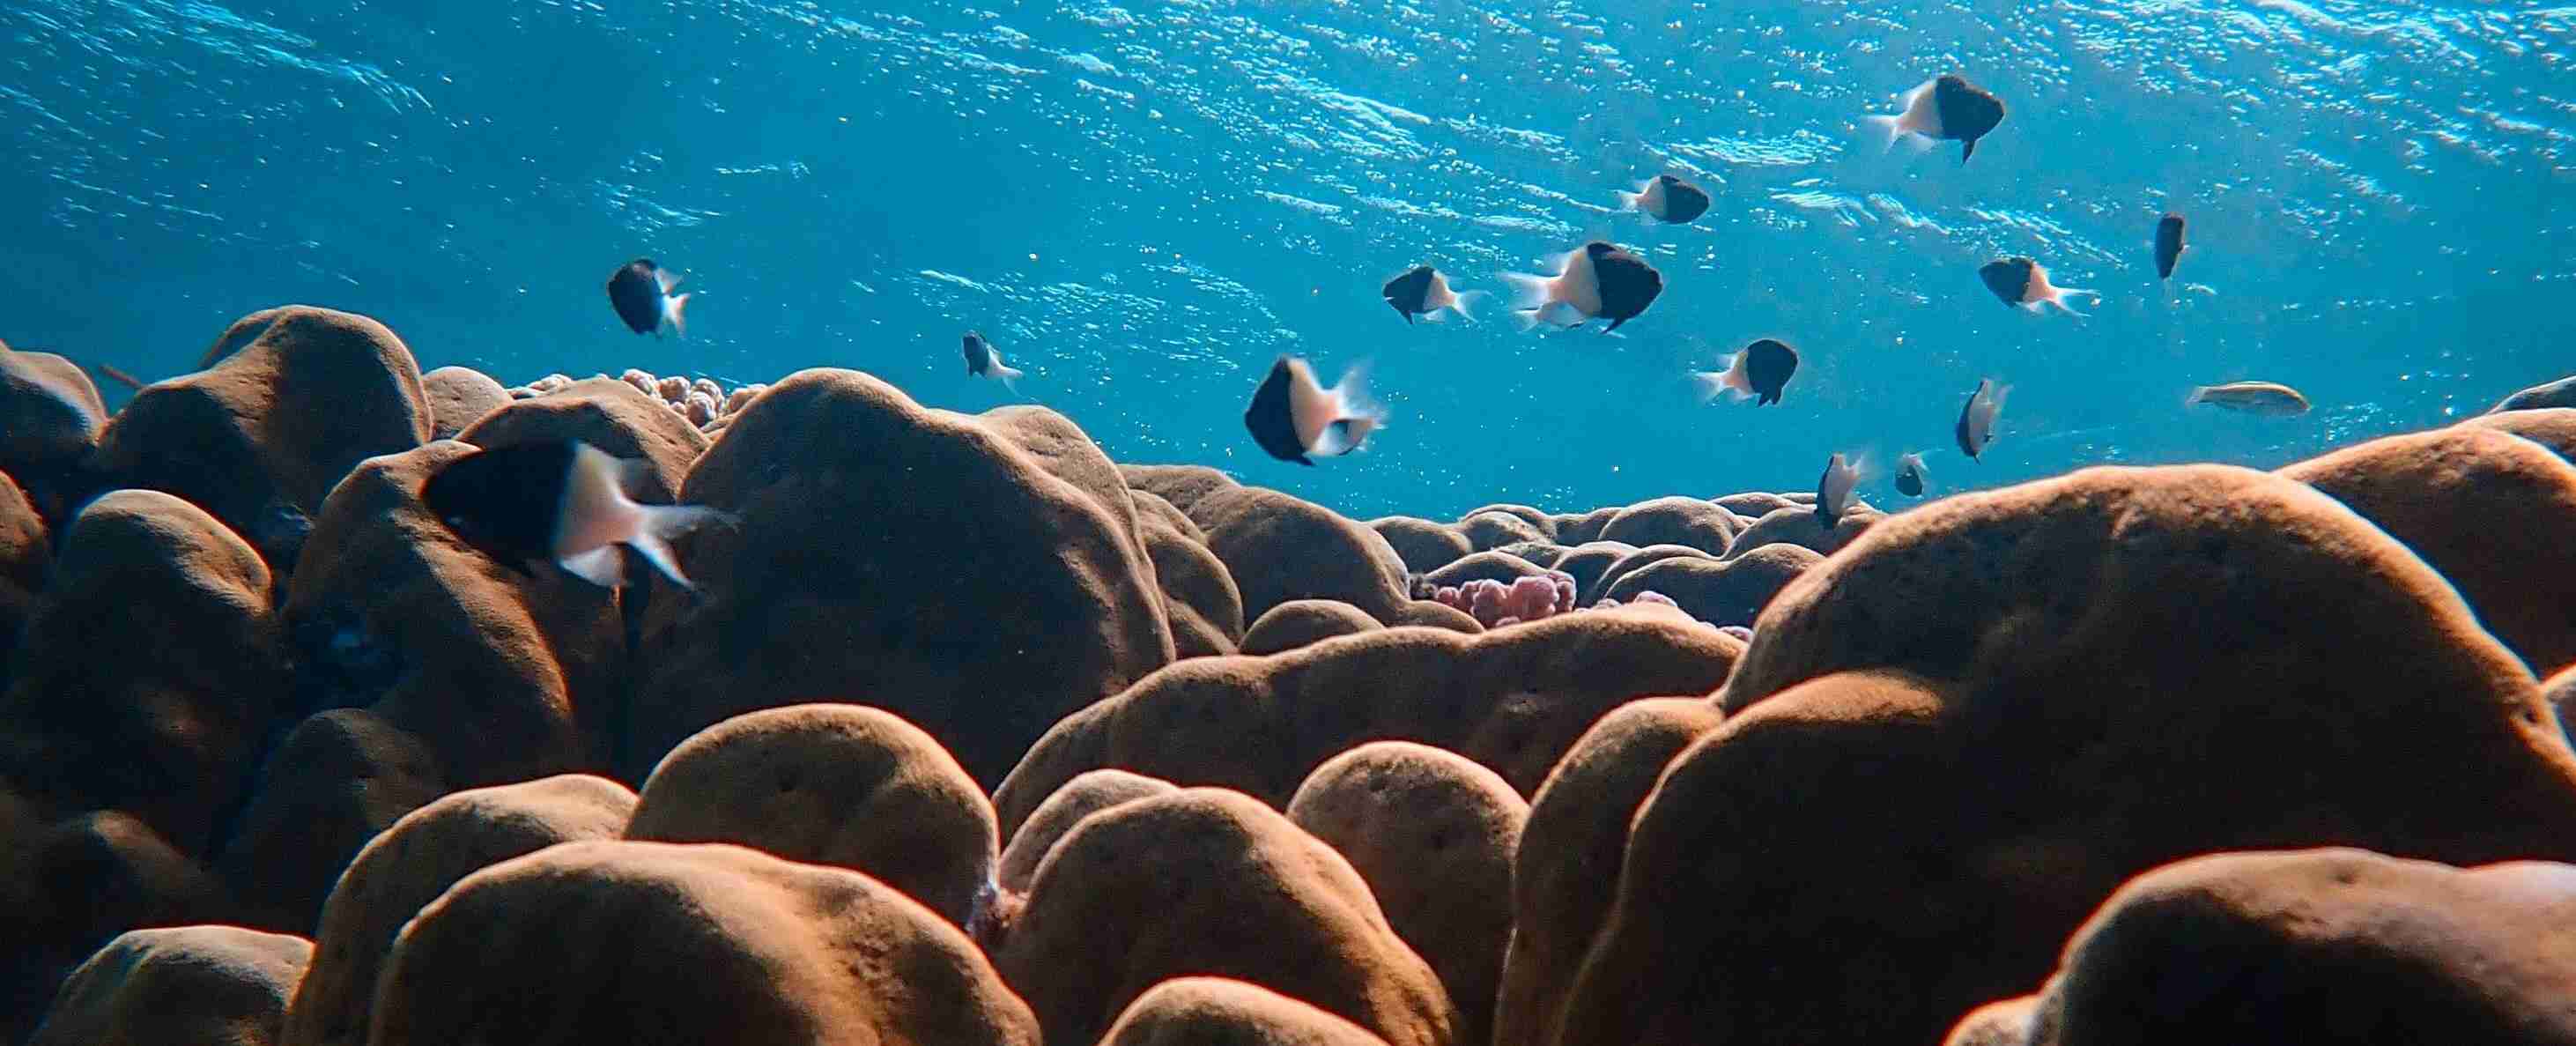 Coral Reef Eco-Friendly Rocks